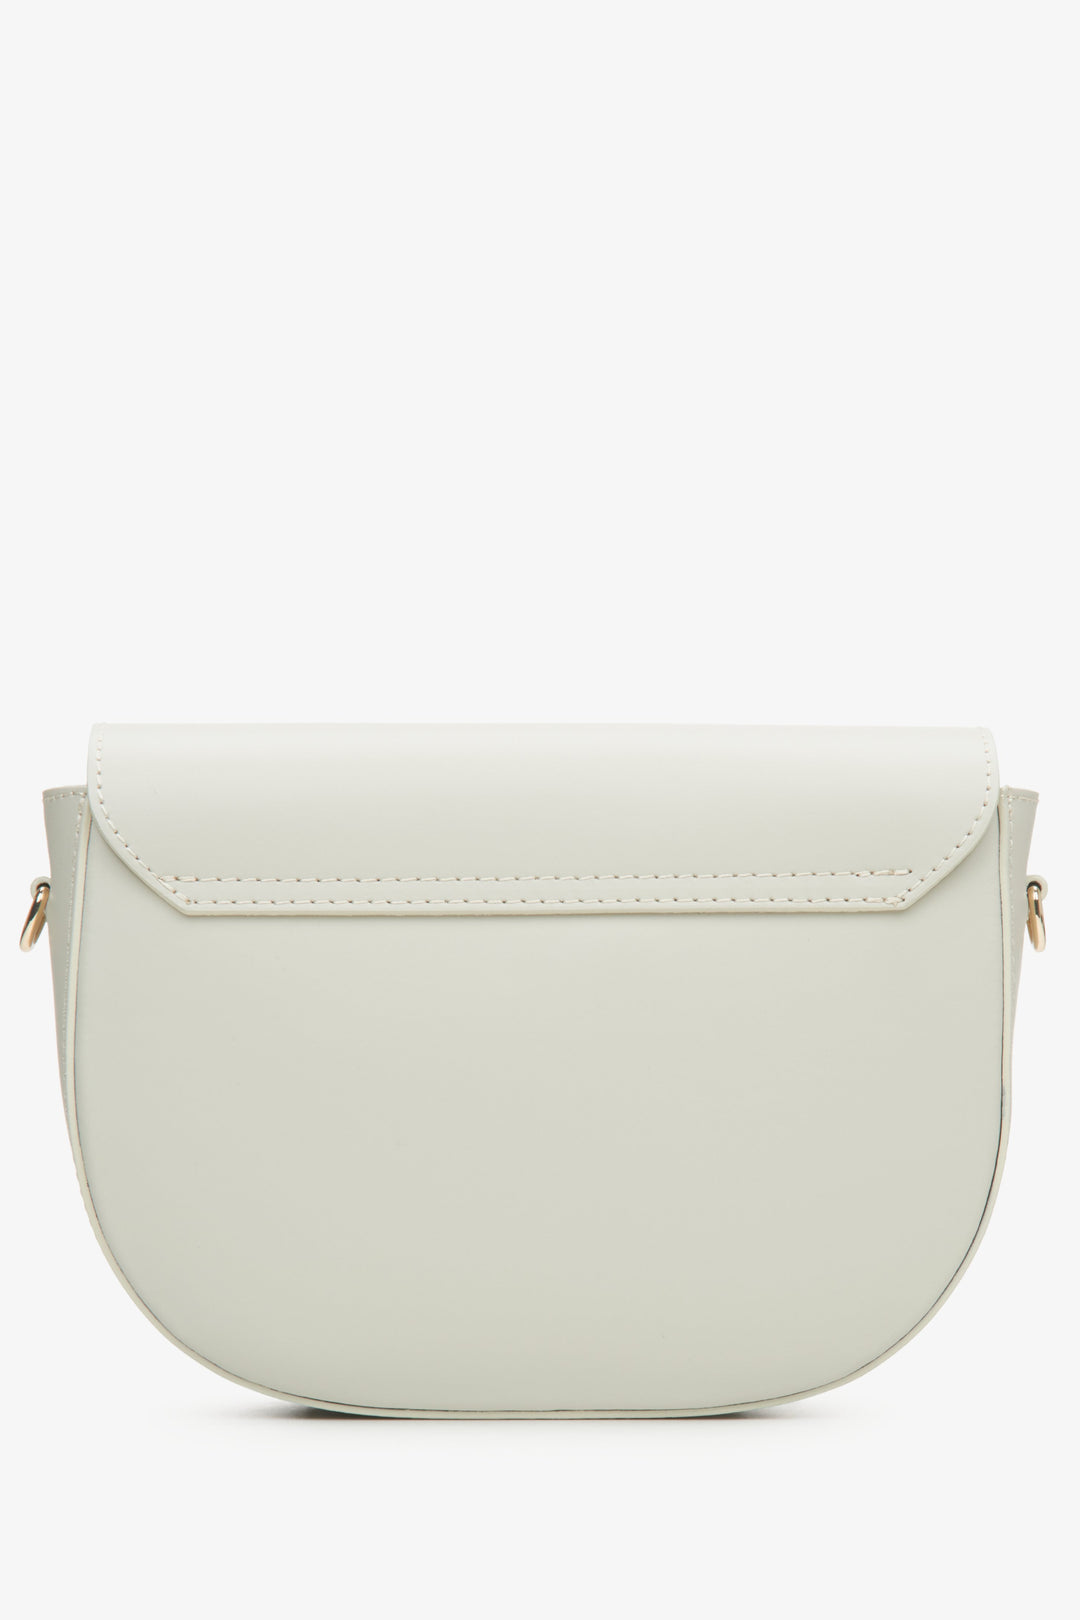 Estro milky-beige semi-circle women's handbag made of Italian genuine leather - back view of the model.